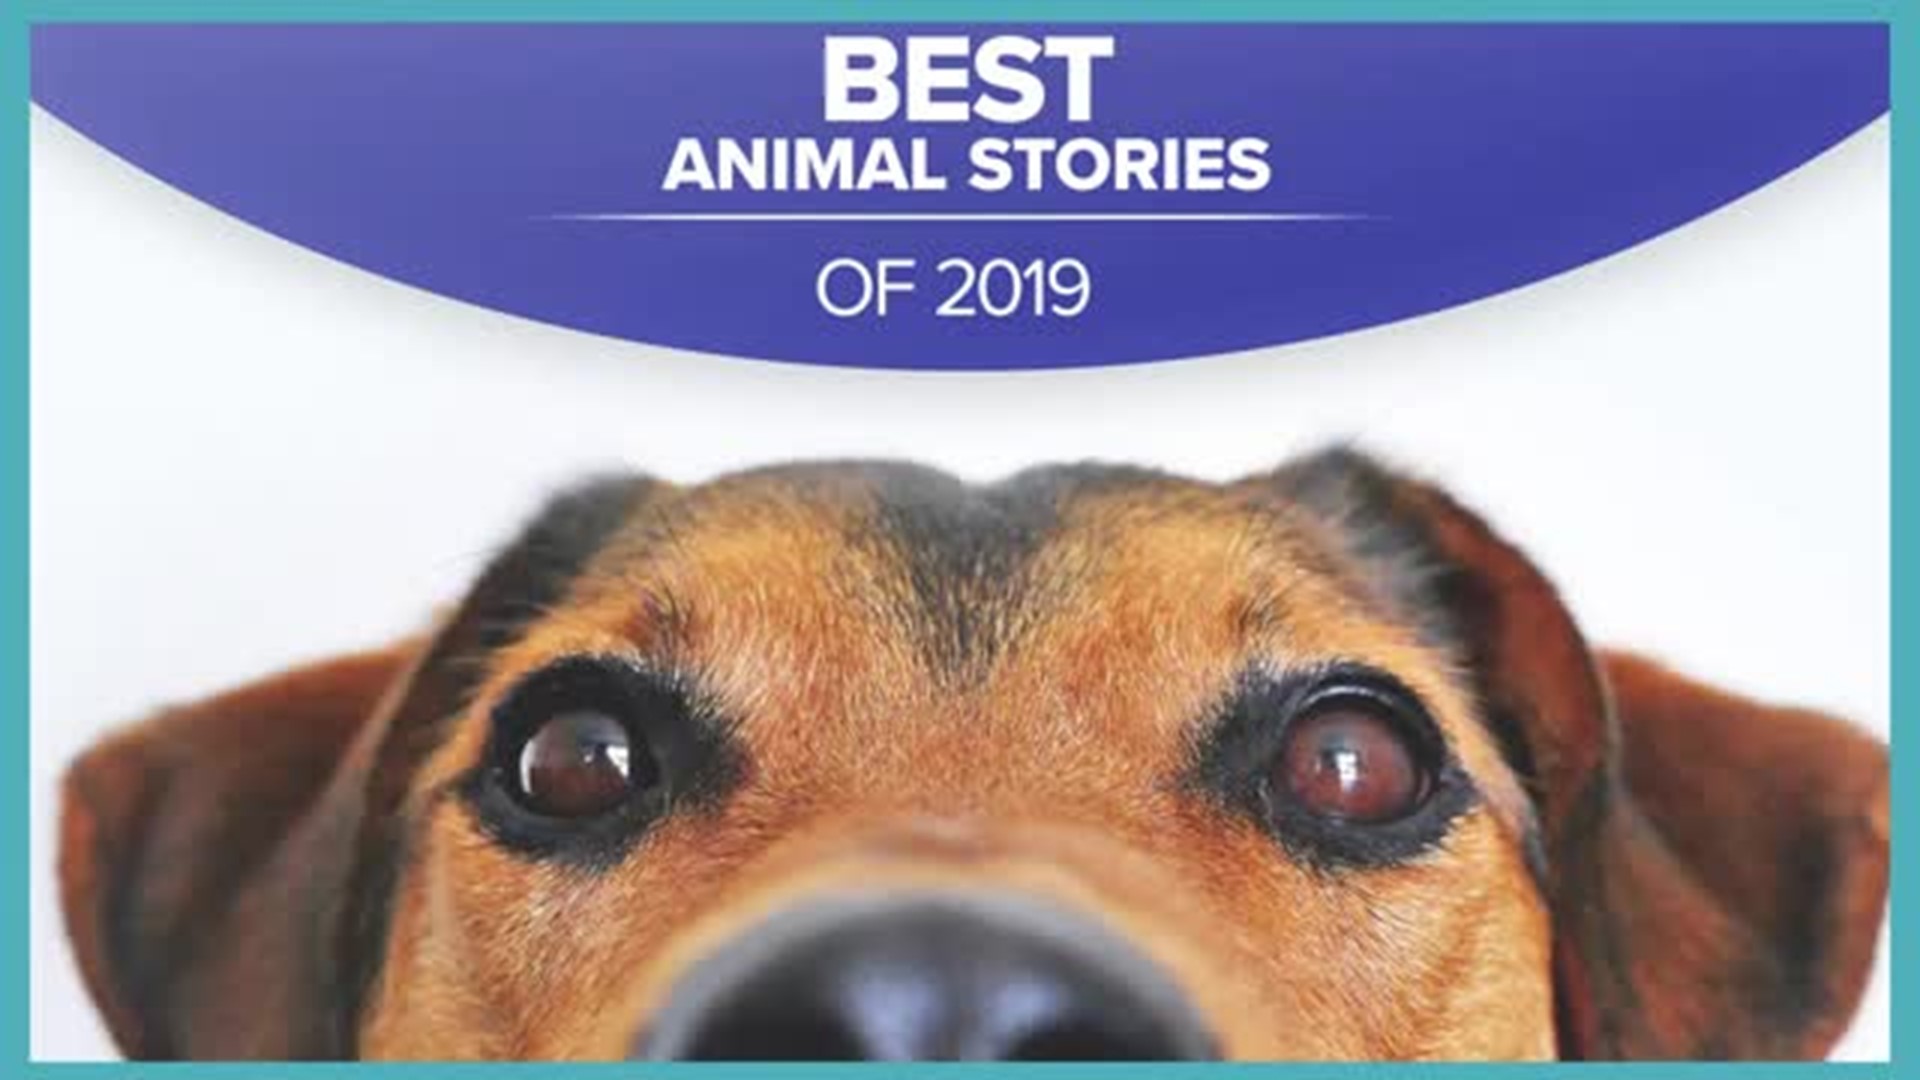 Best Animal Stories of 2019